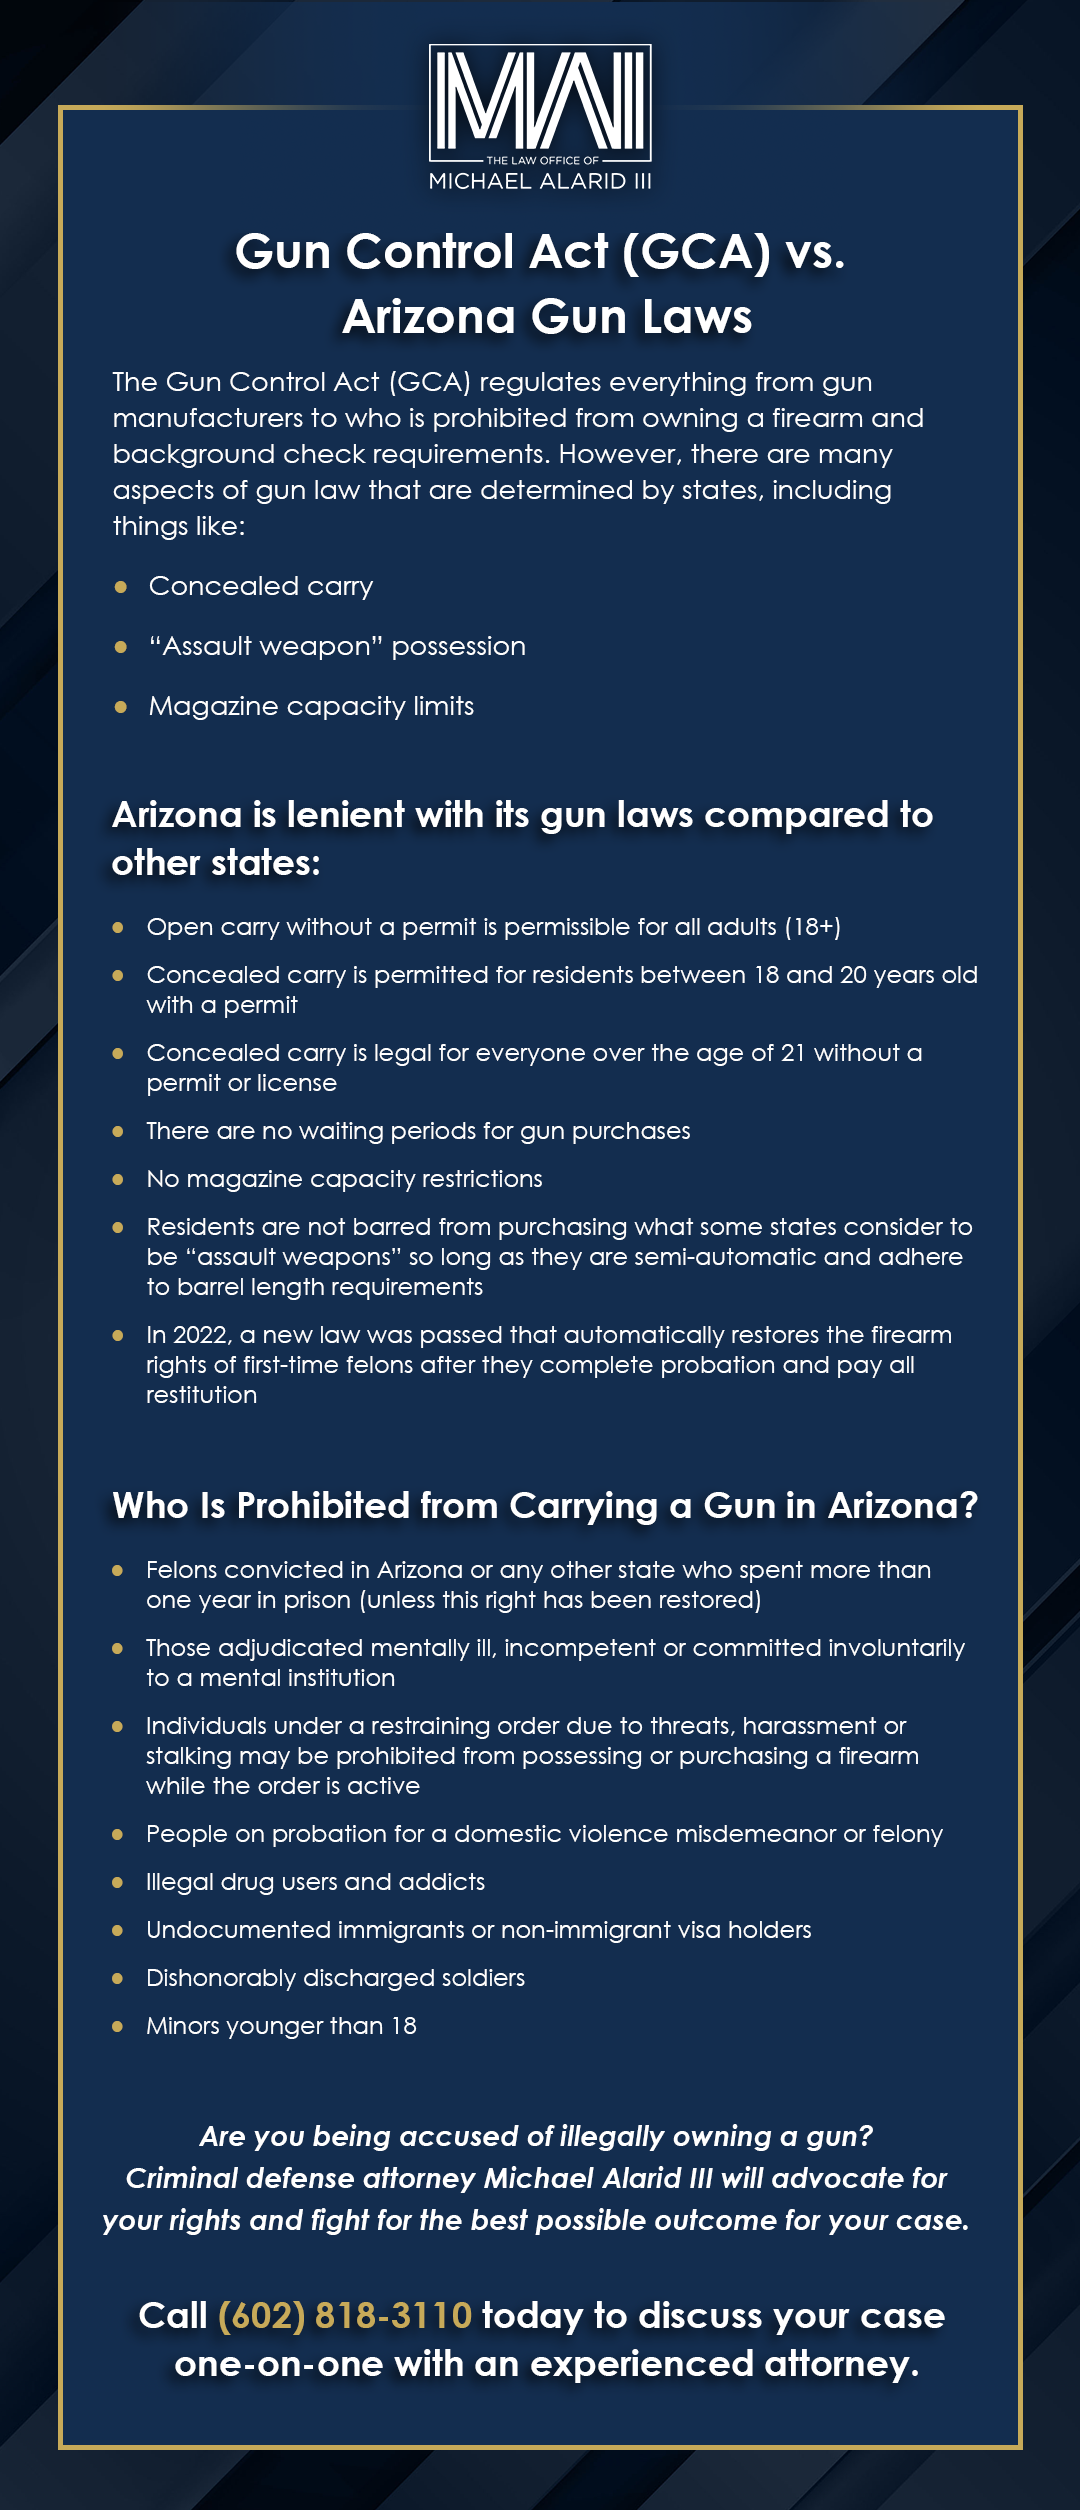 GAC vs Arizona gun Laws